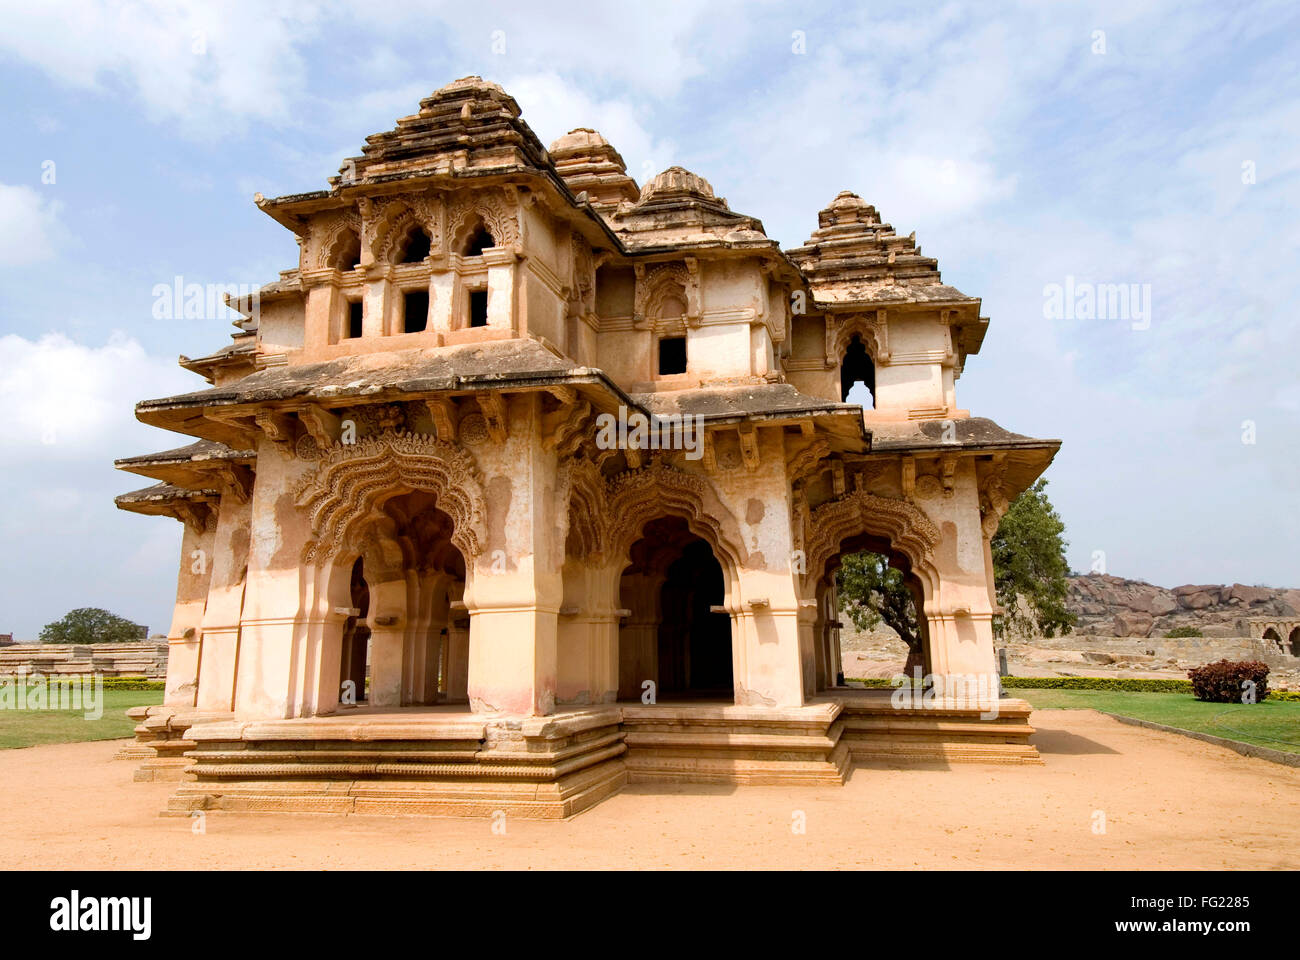 Lotus mahal amazing synthèse de style islamique et hindoue Hampi , Karnataka , Inde Banque D'Images